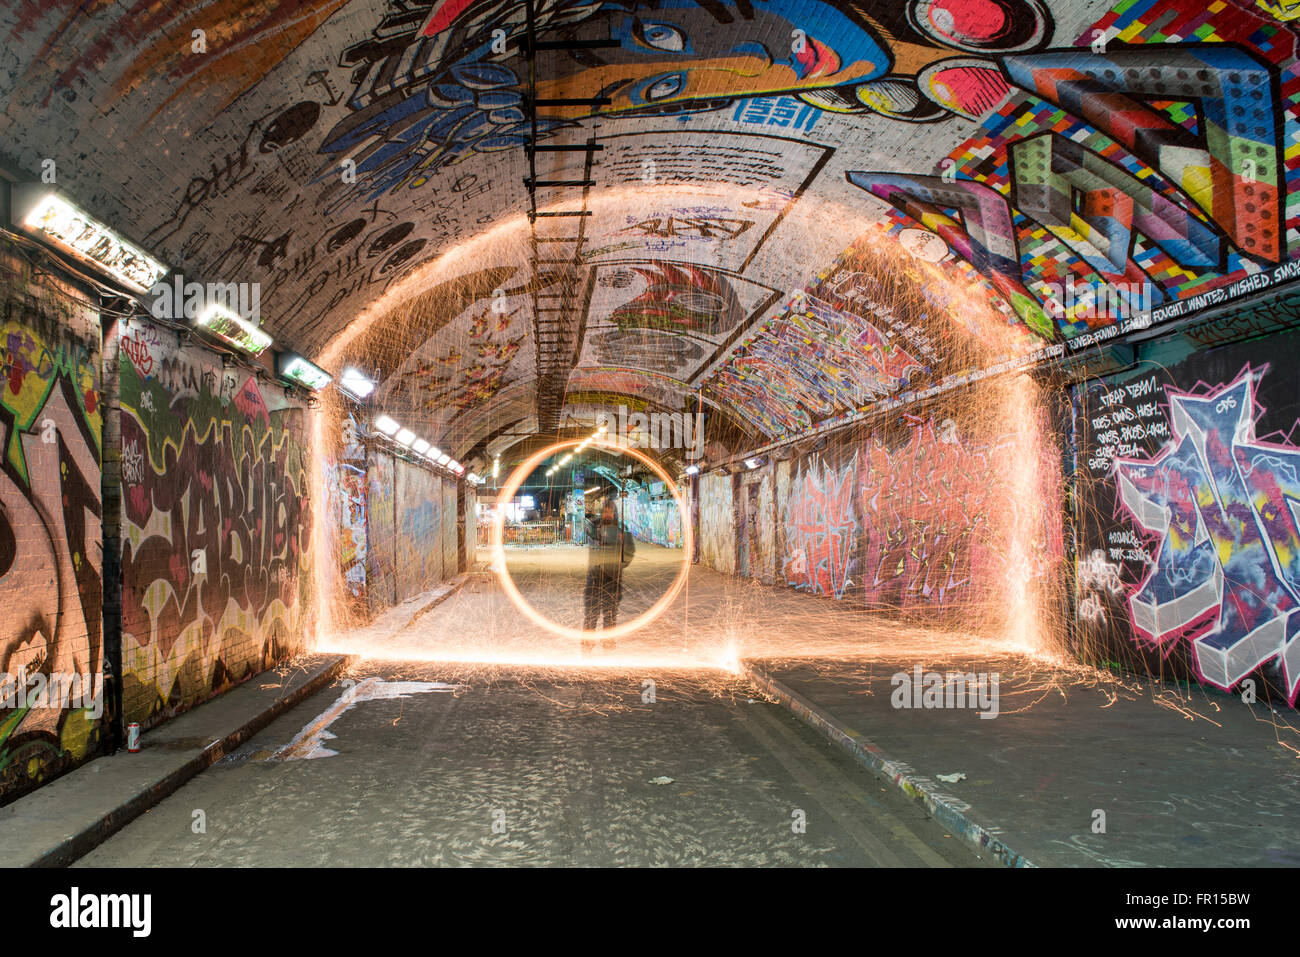 Silhouette of man spinning illuminated wire wool at night inside graffiti tunnel Waterloo in London, UK Stock Photo